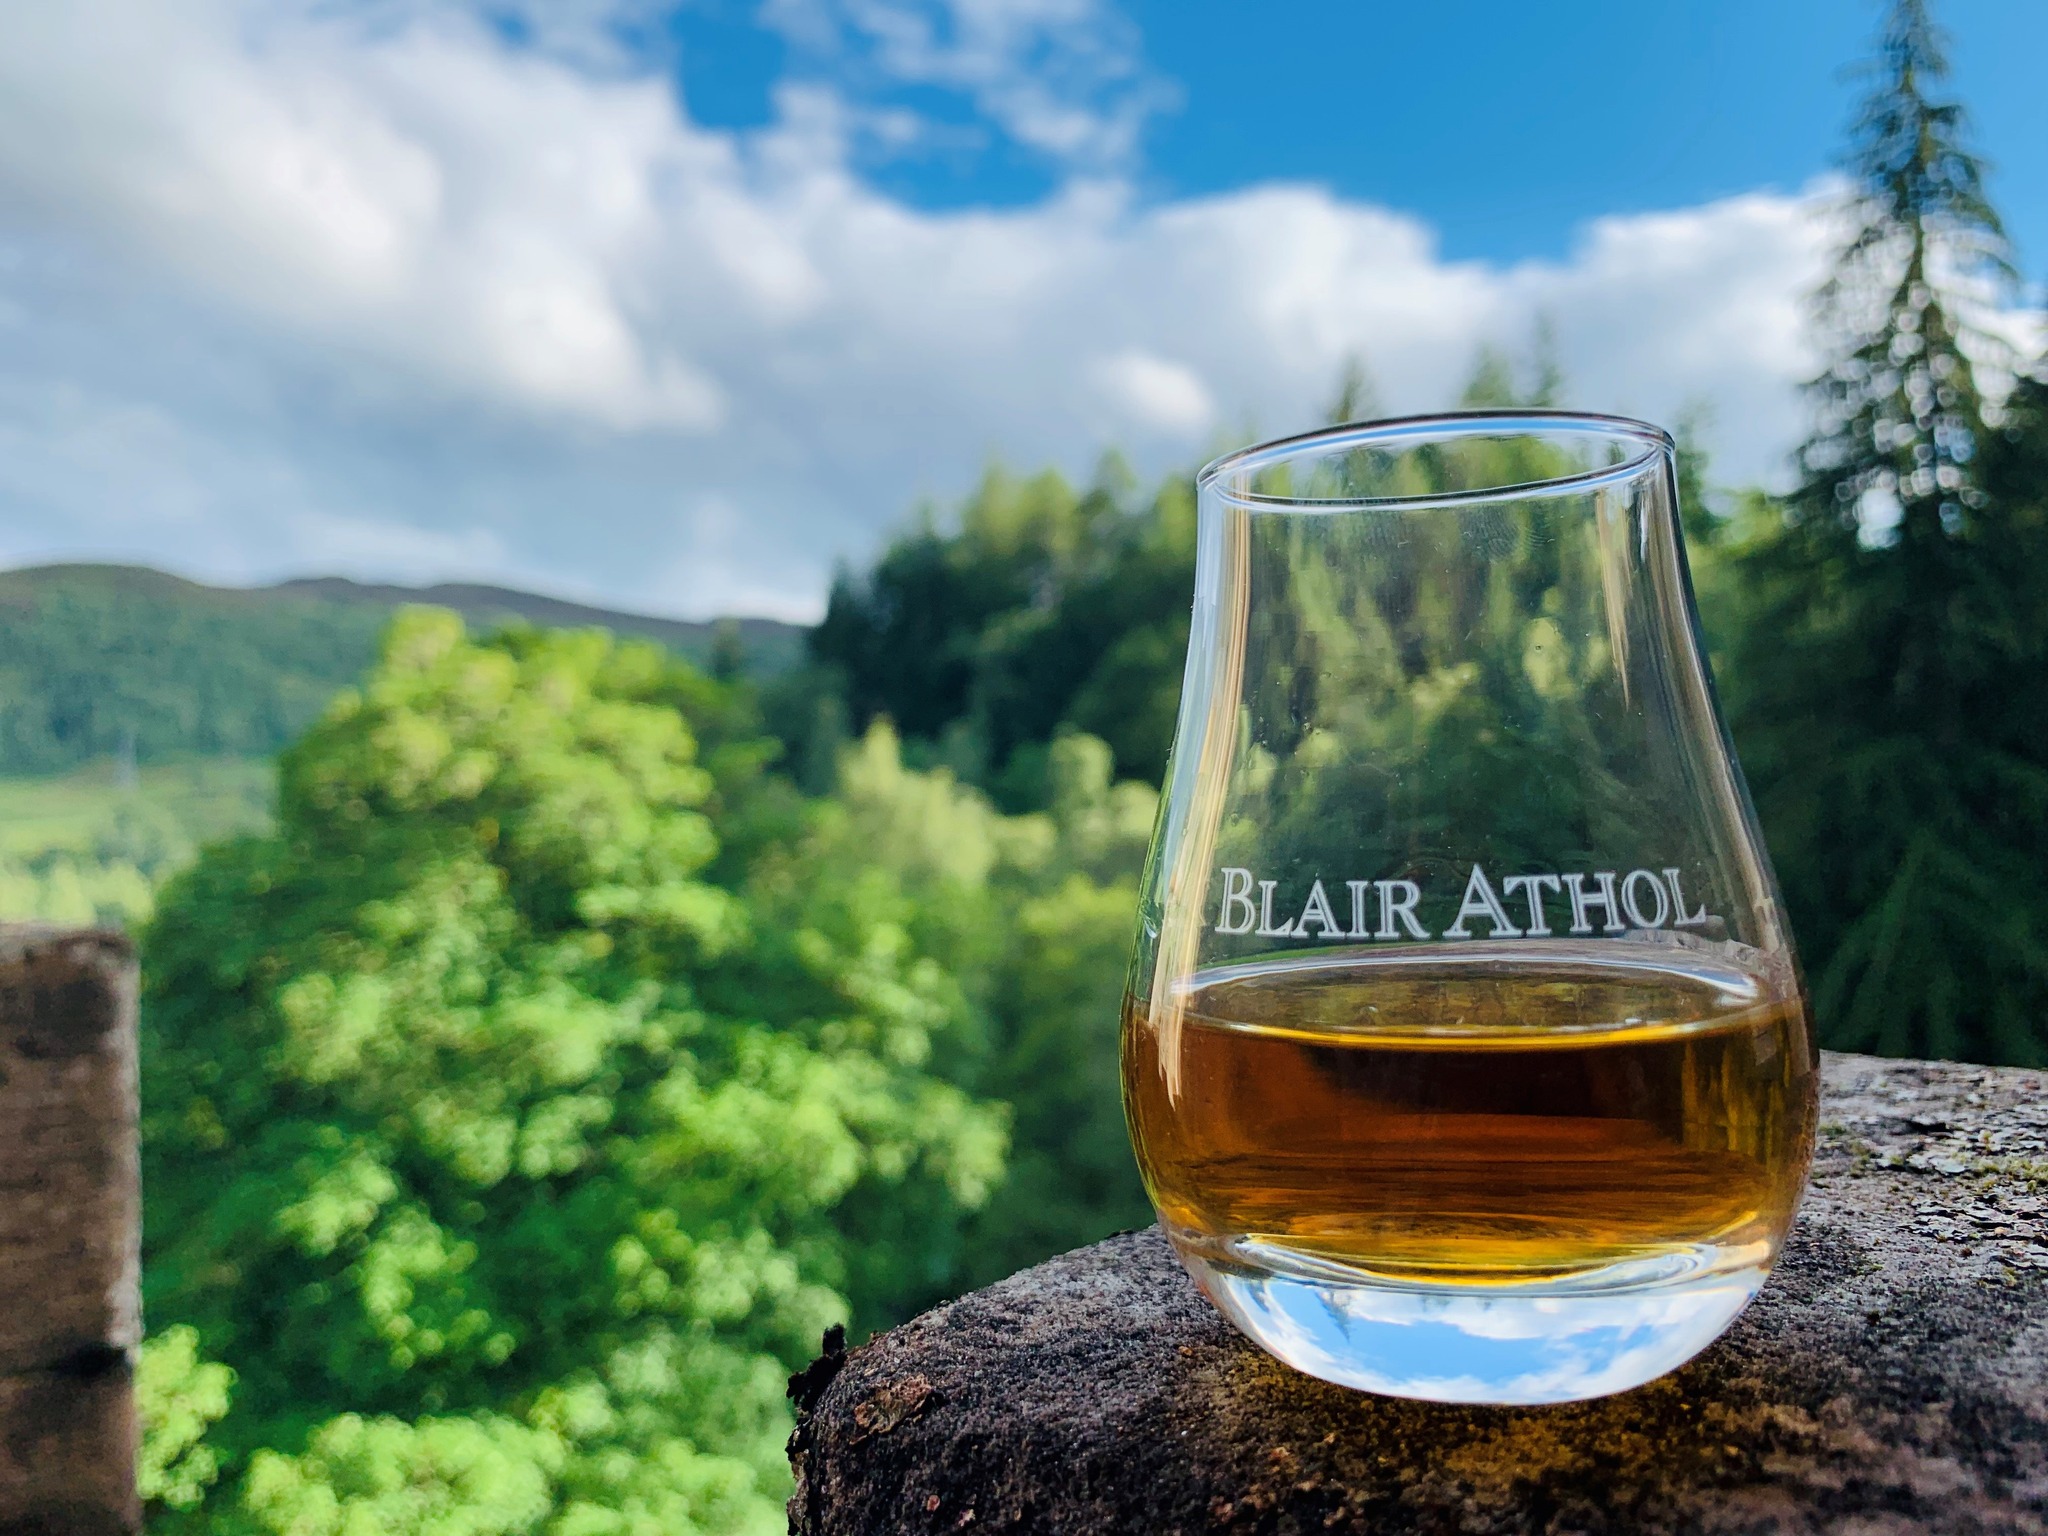 Blair Athol whisky